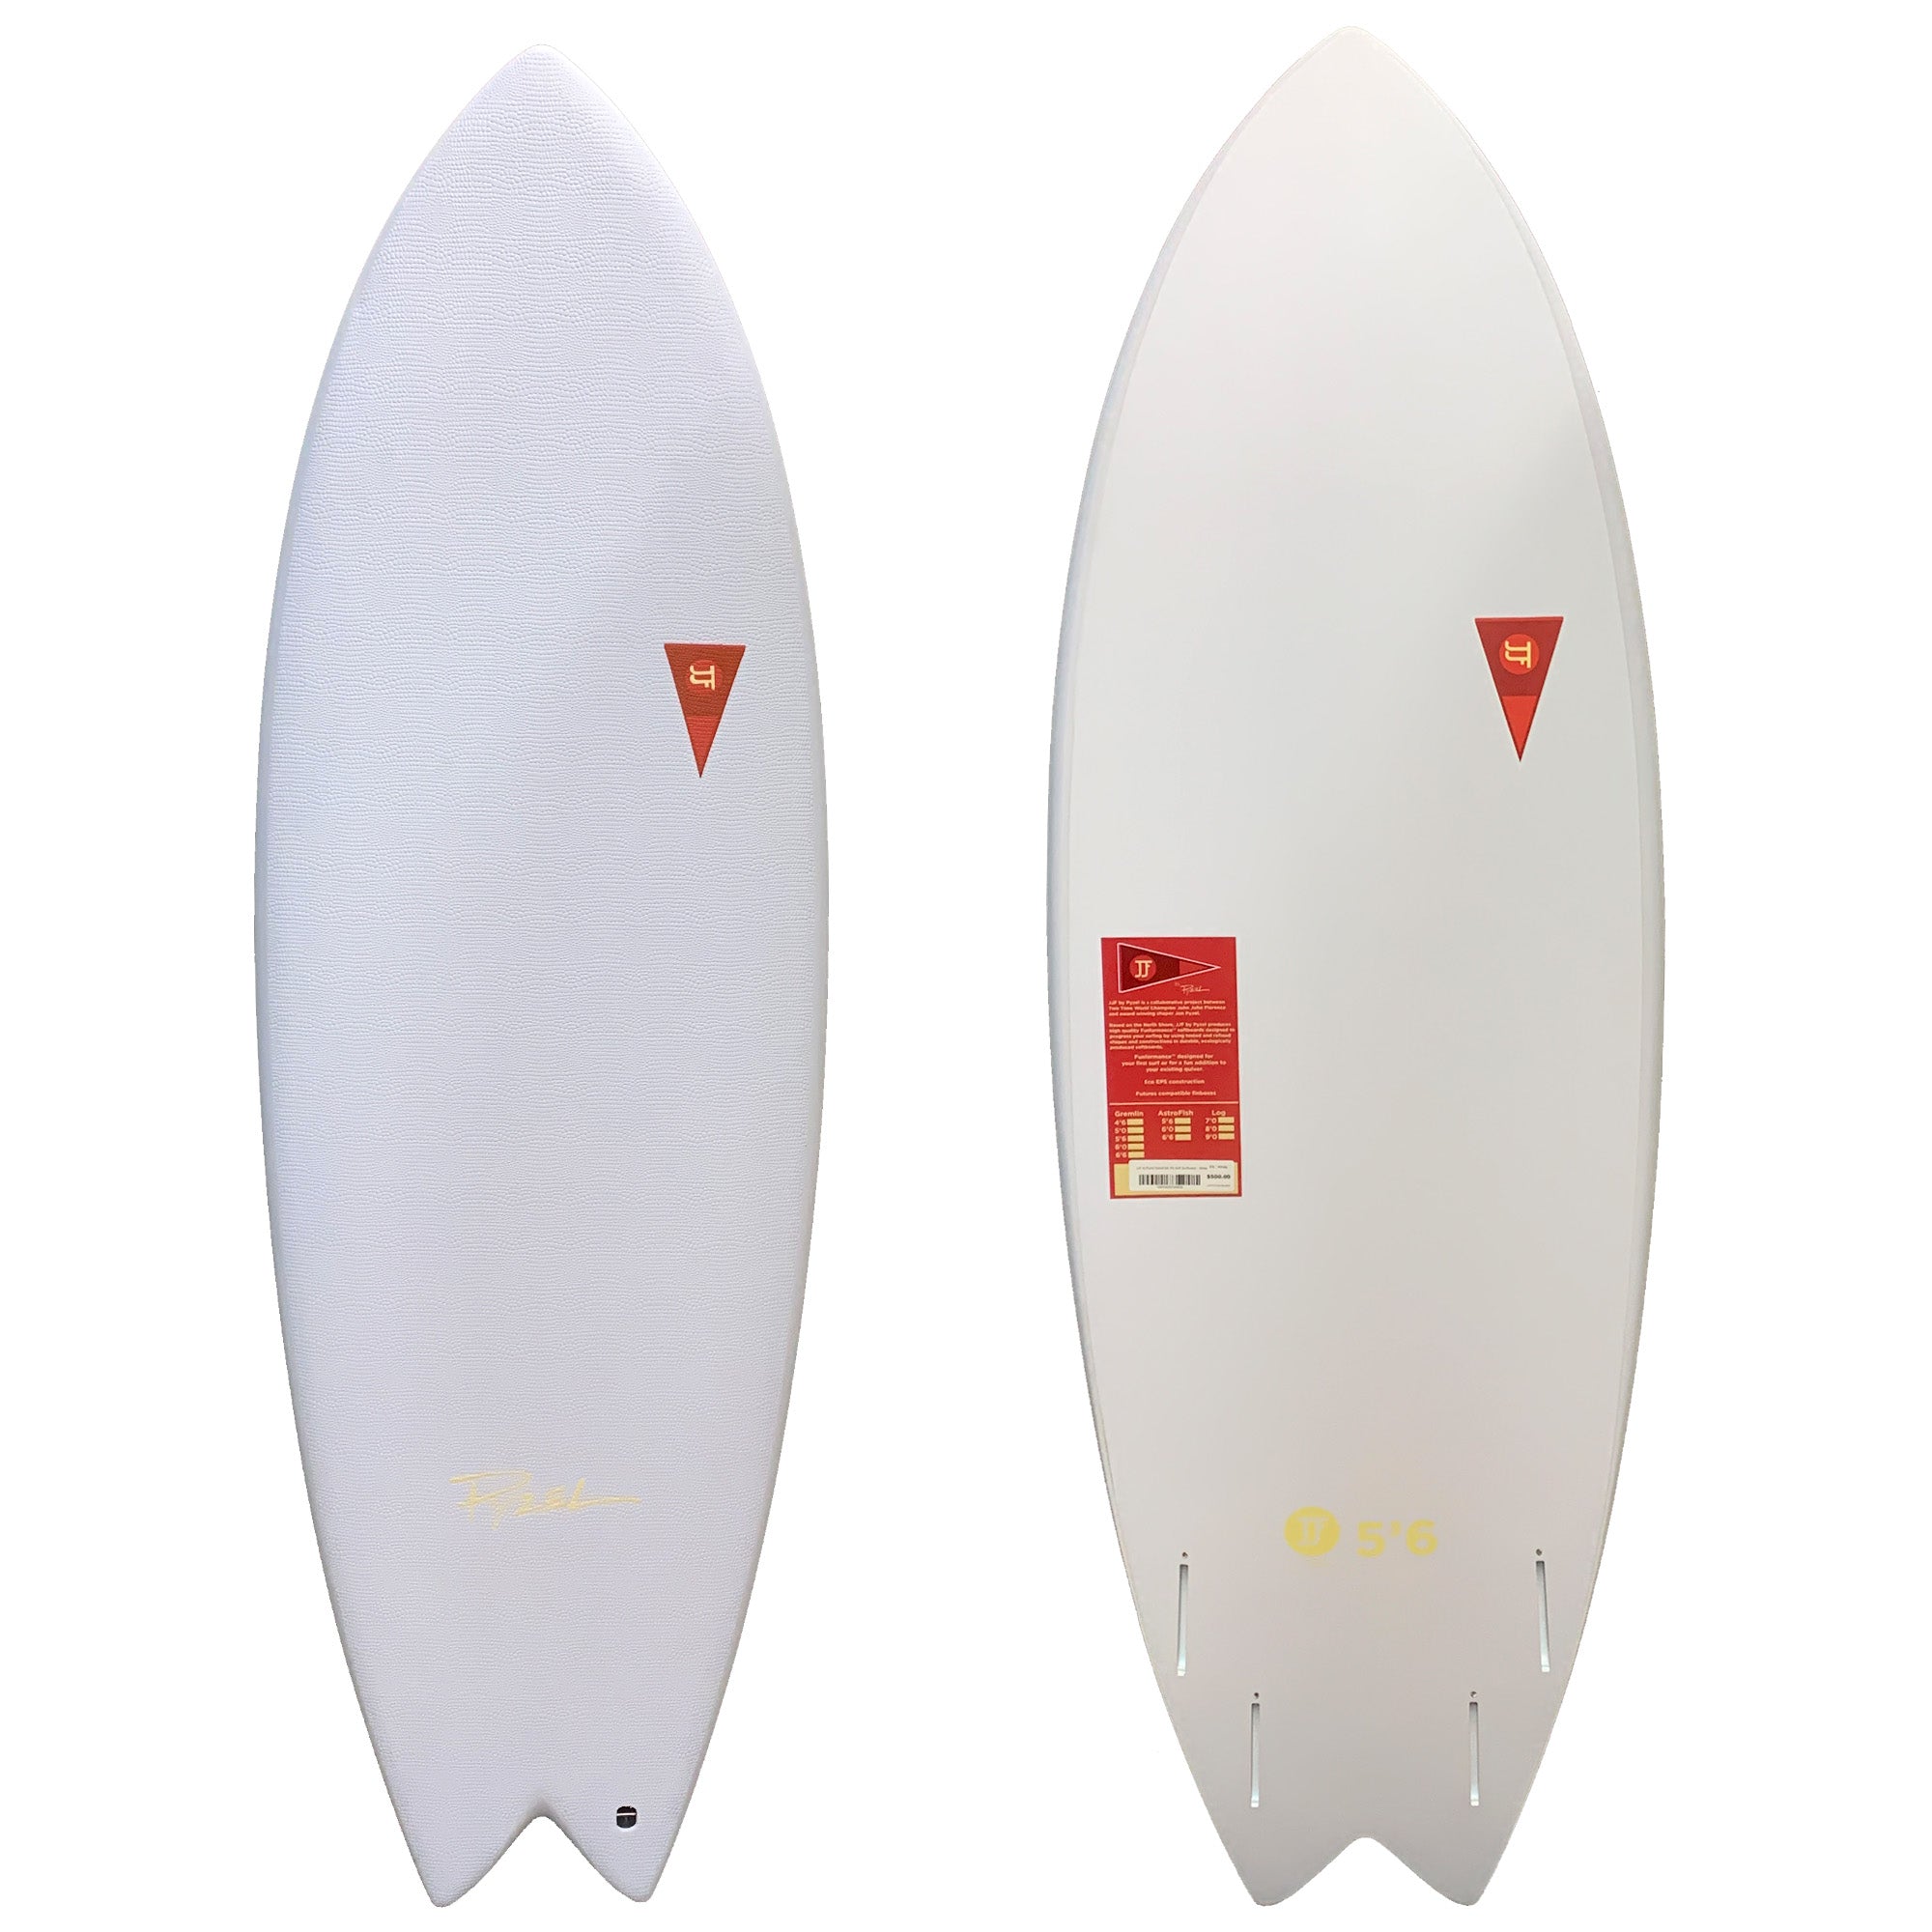 JJF by Pyzel AstroFish 5'6 Soft Surfboard - White